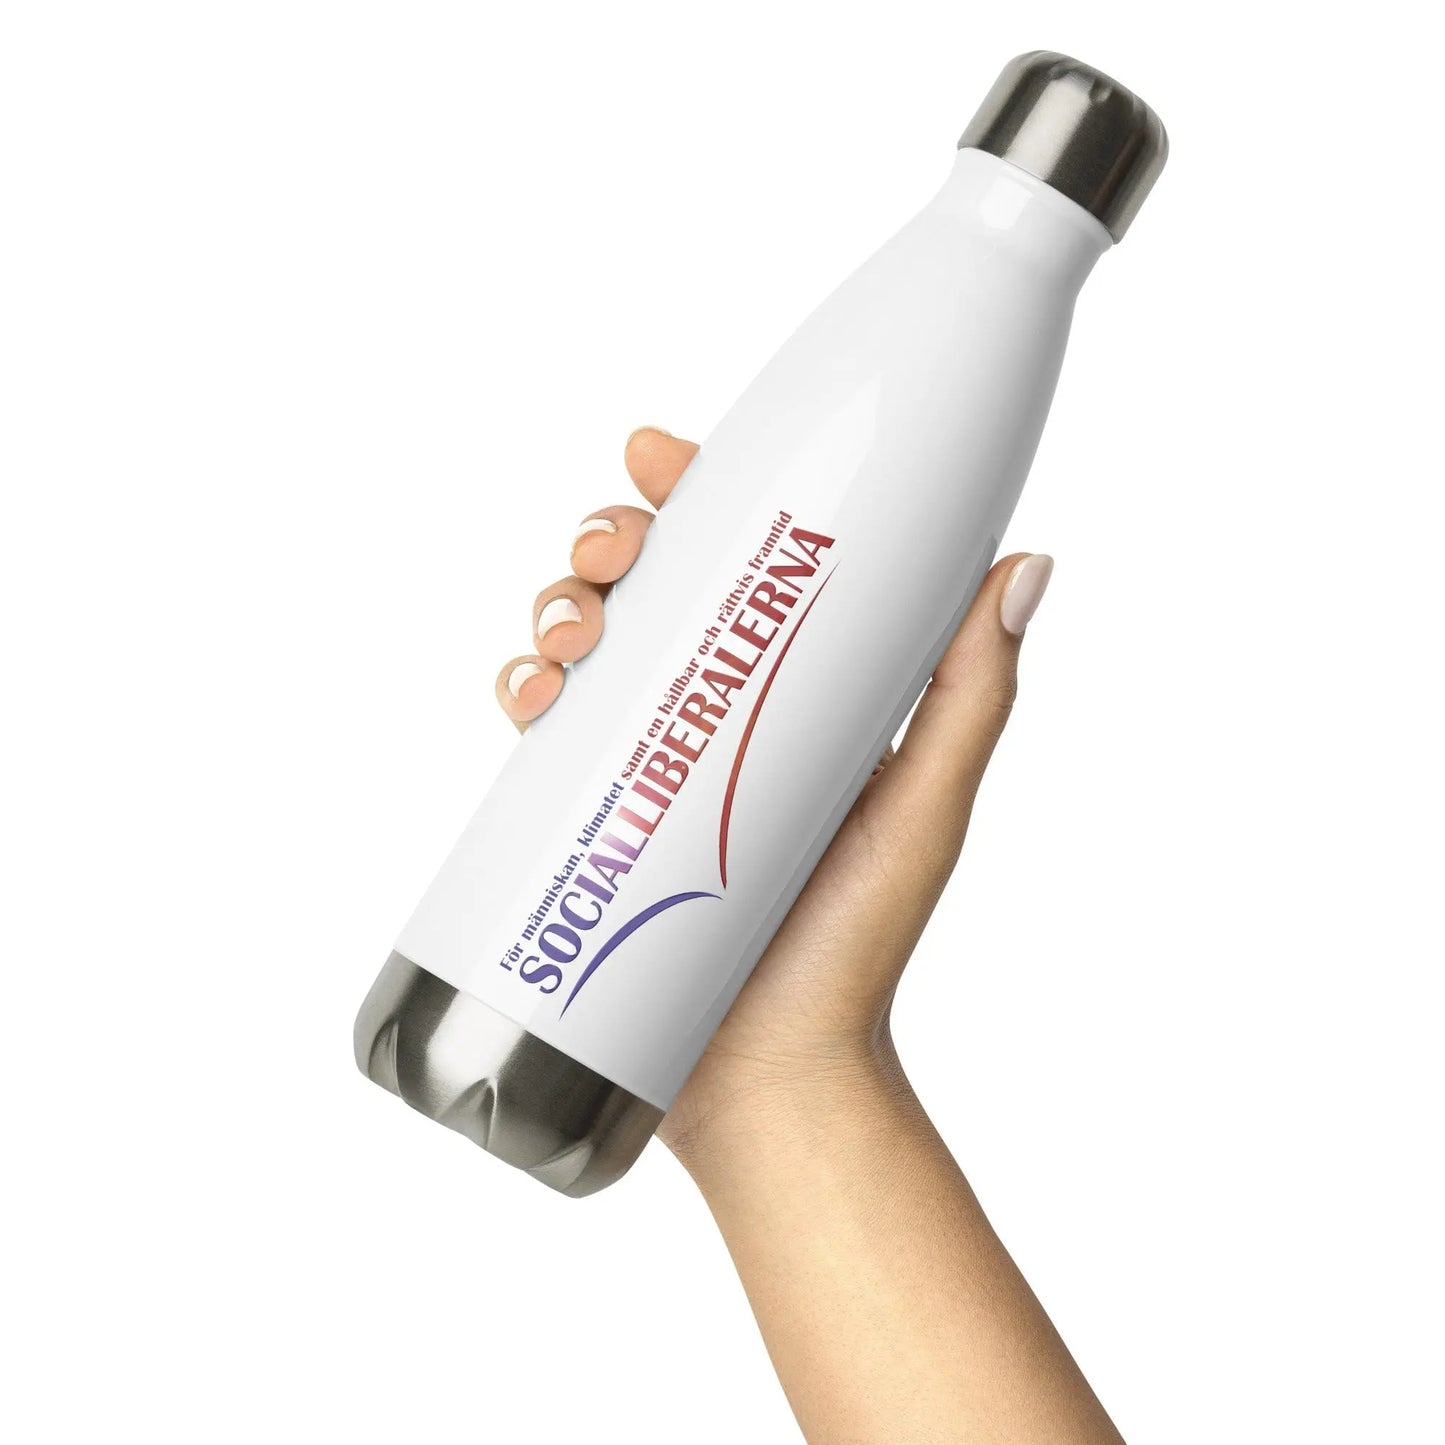 3 Socialliberalerna Stainless Steel Water Bottle by Neduz